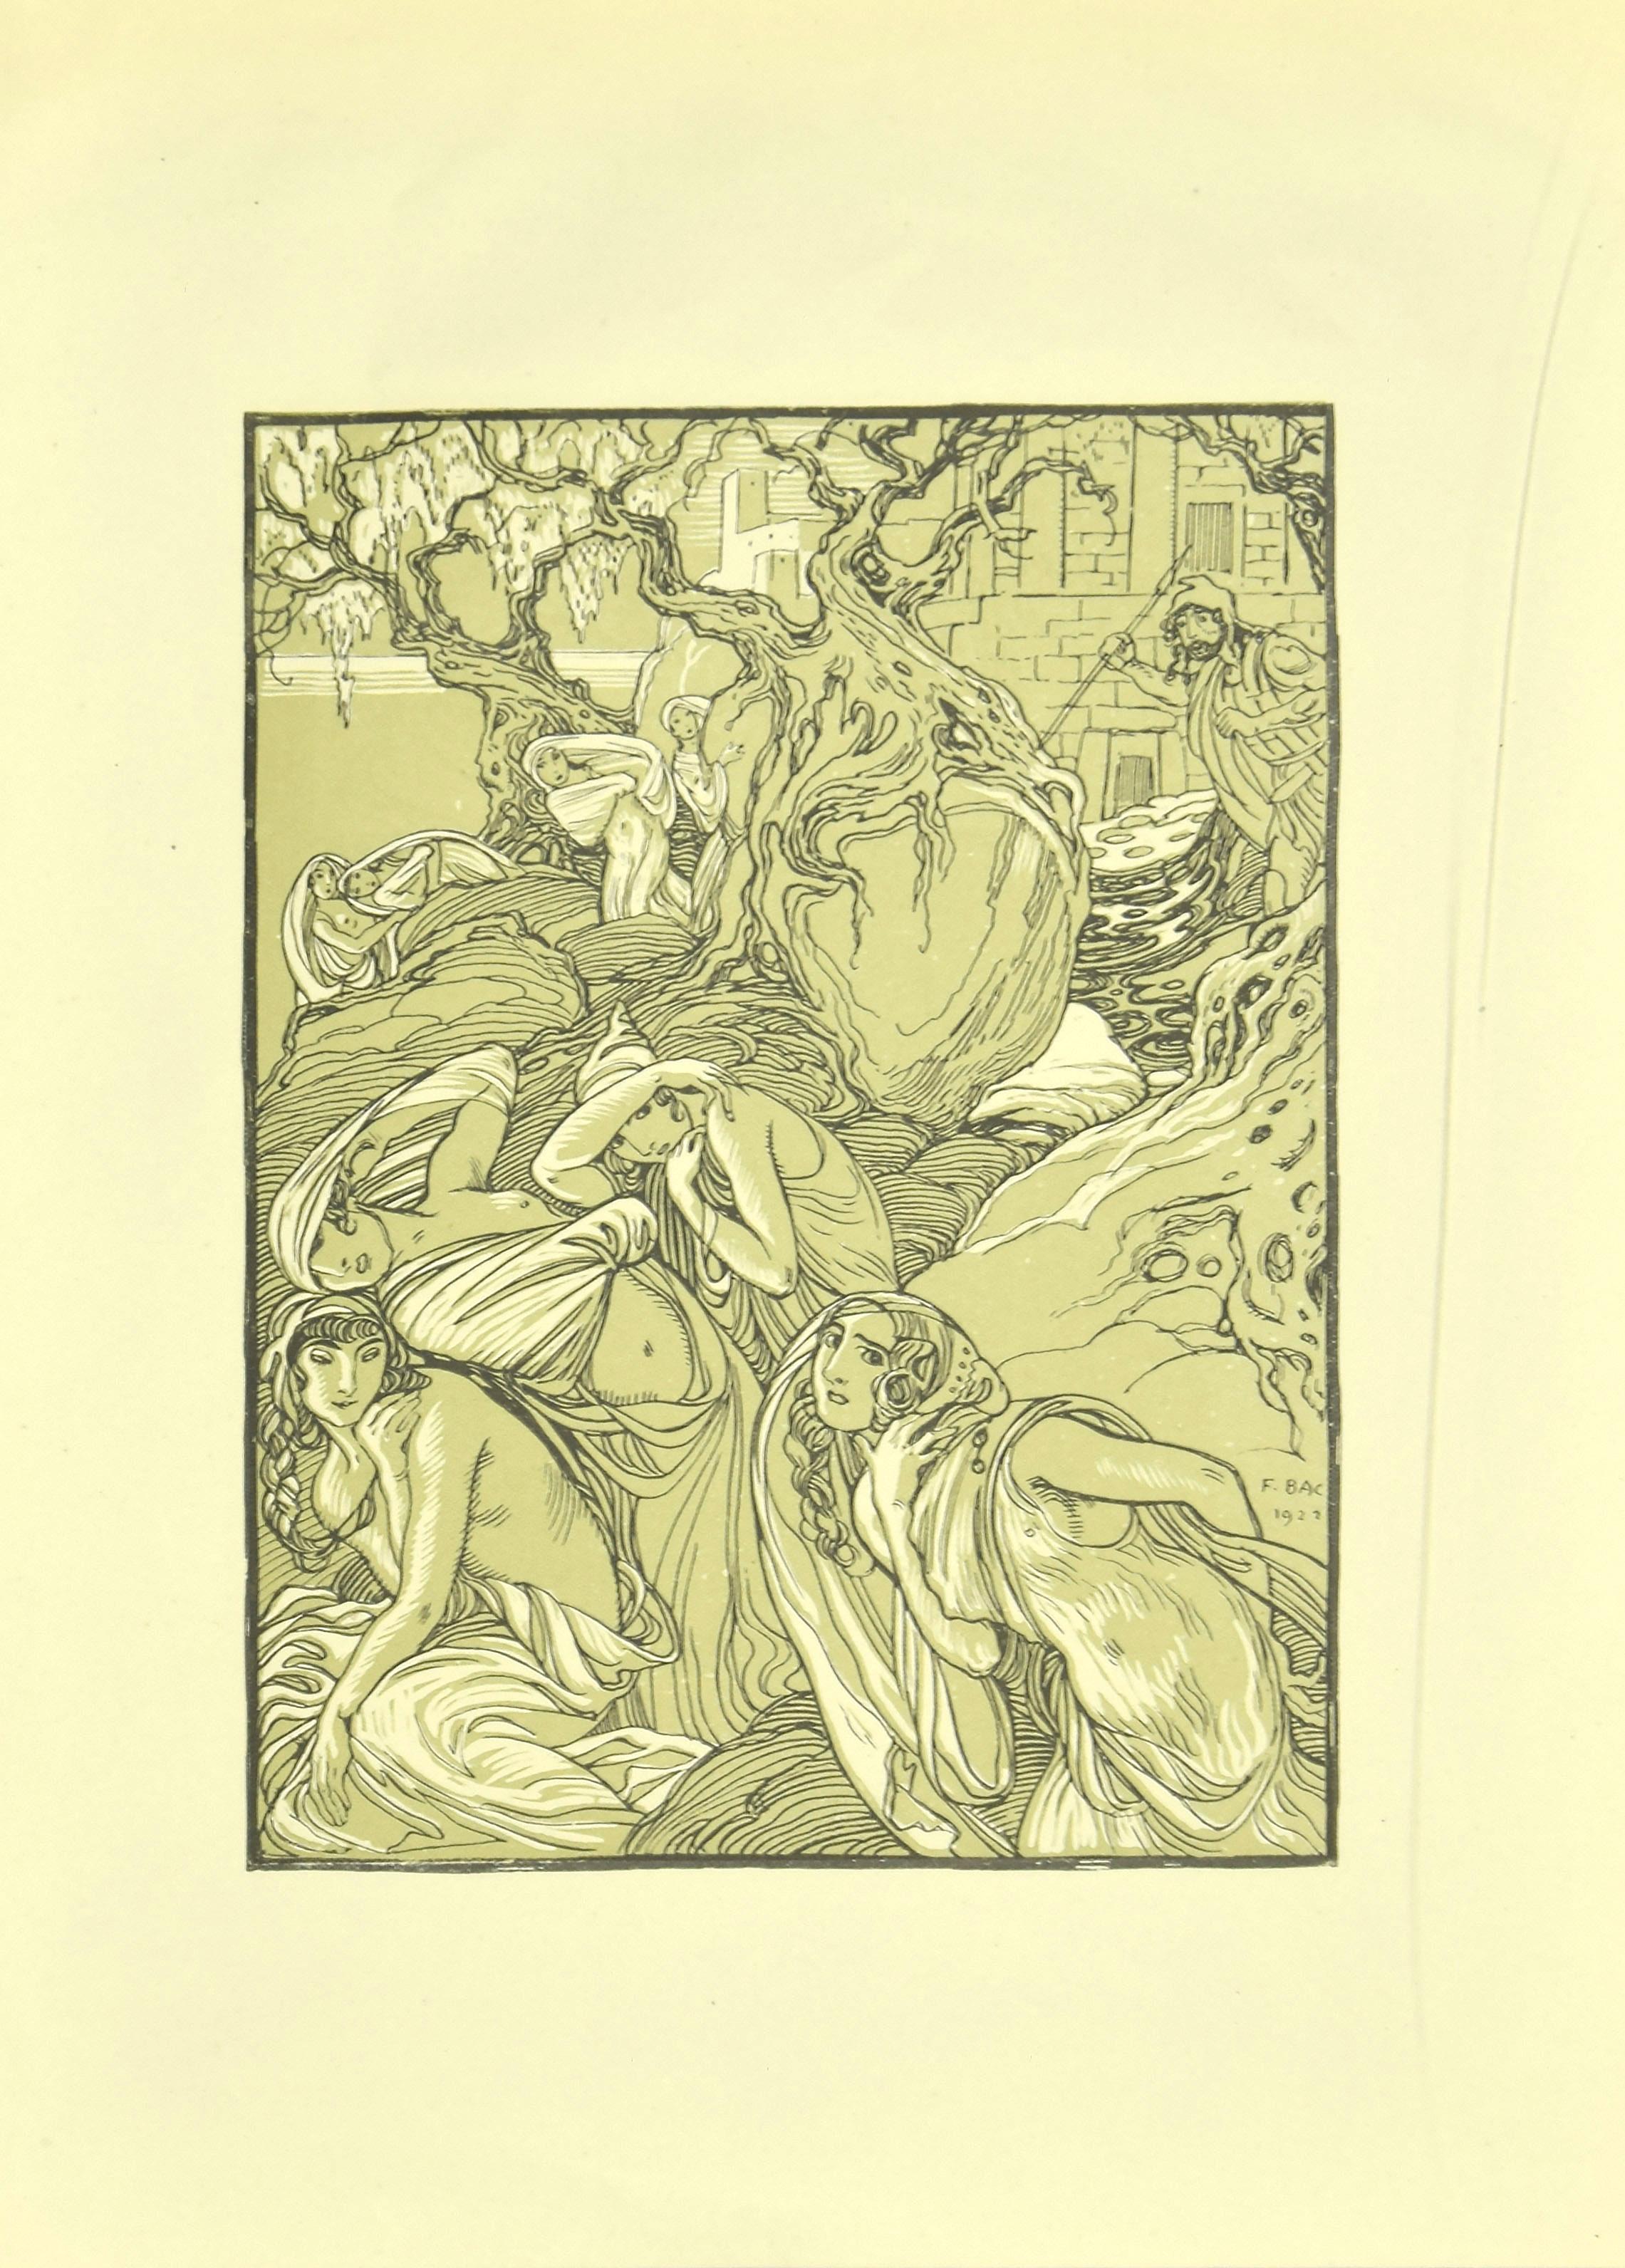 Ferdinand Bac Figurative Print - The Escape of Women - Original Lithograph by F. Bac - 1922